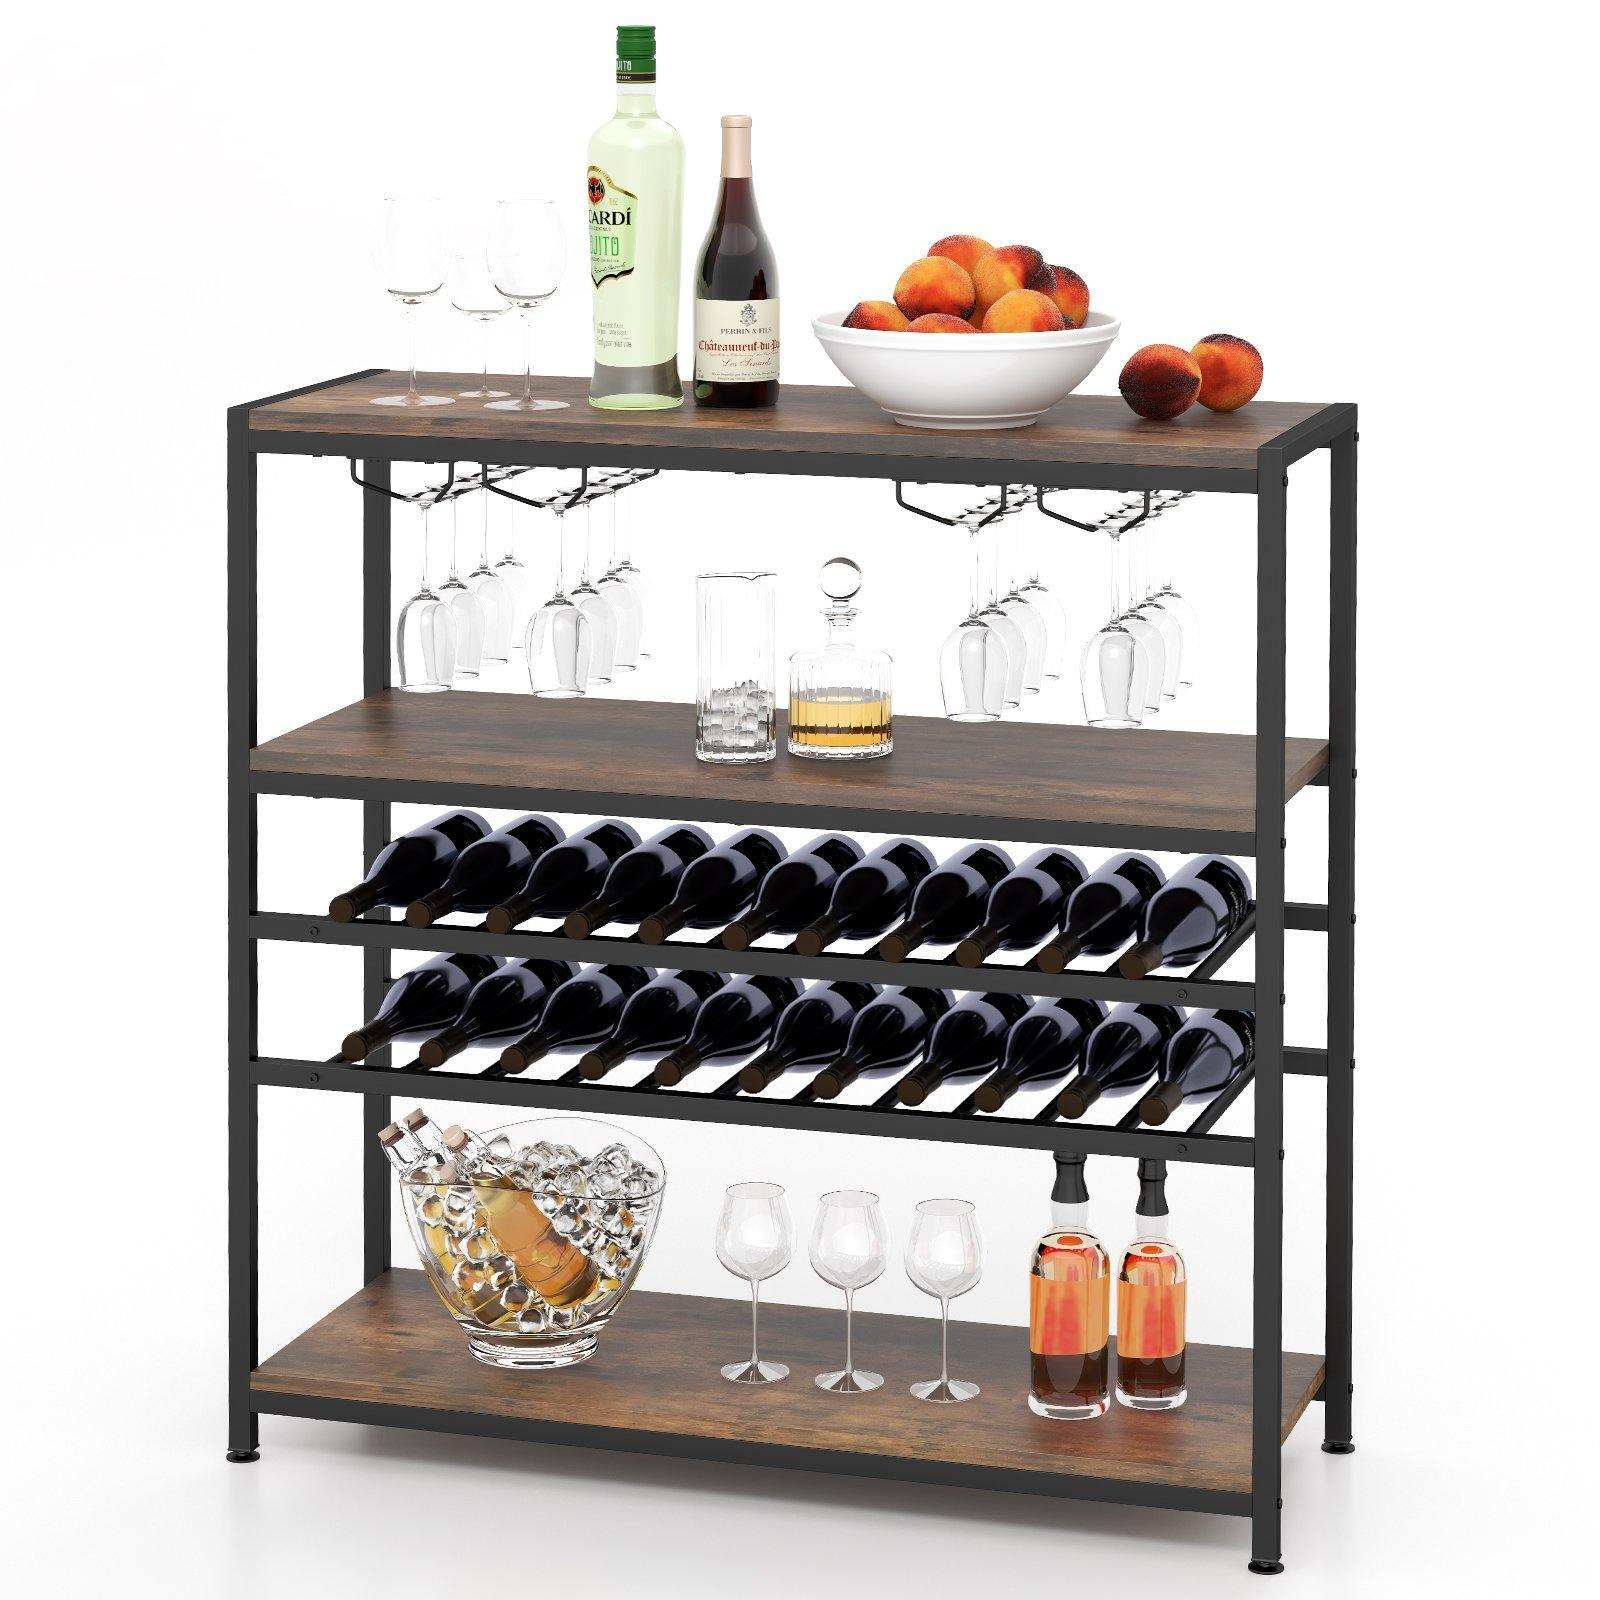 5-tier Wine Rack Table Freestanding Bar Wine Racks With 4 Rows of Glass Holders - image 1